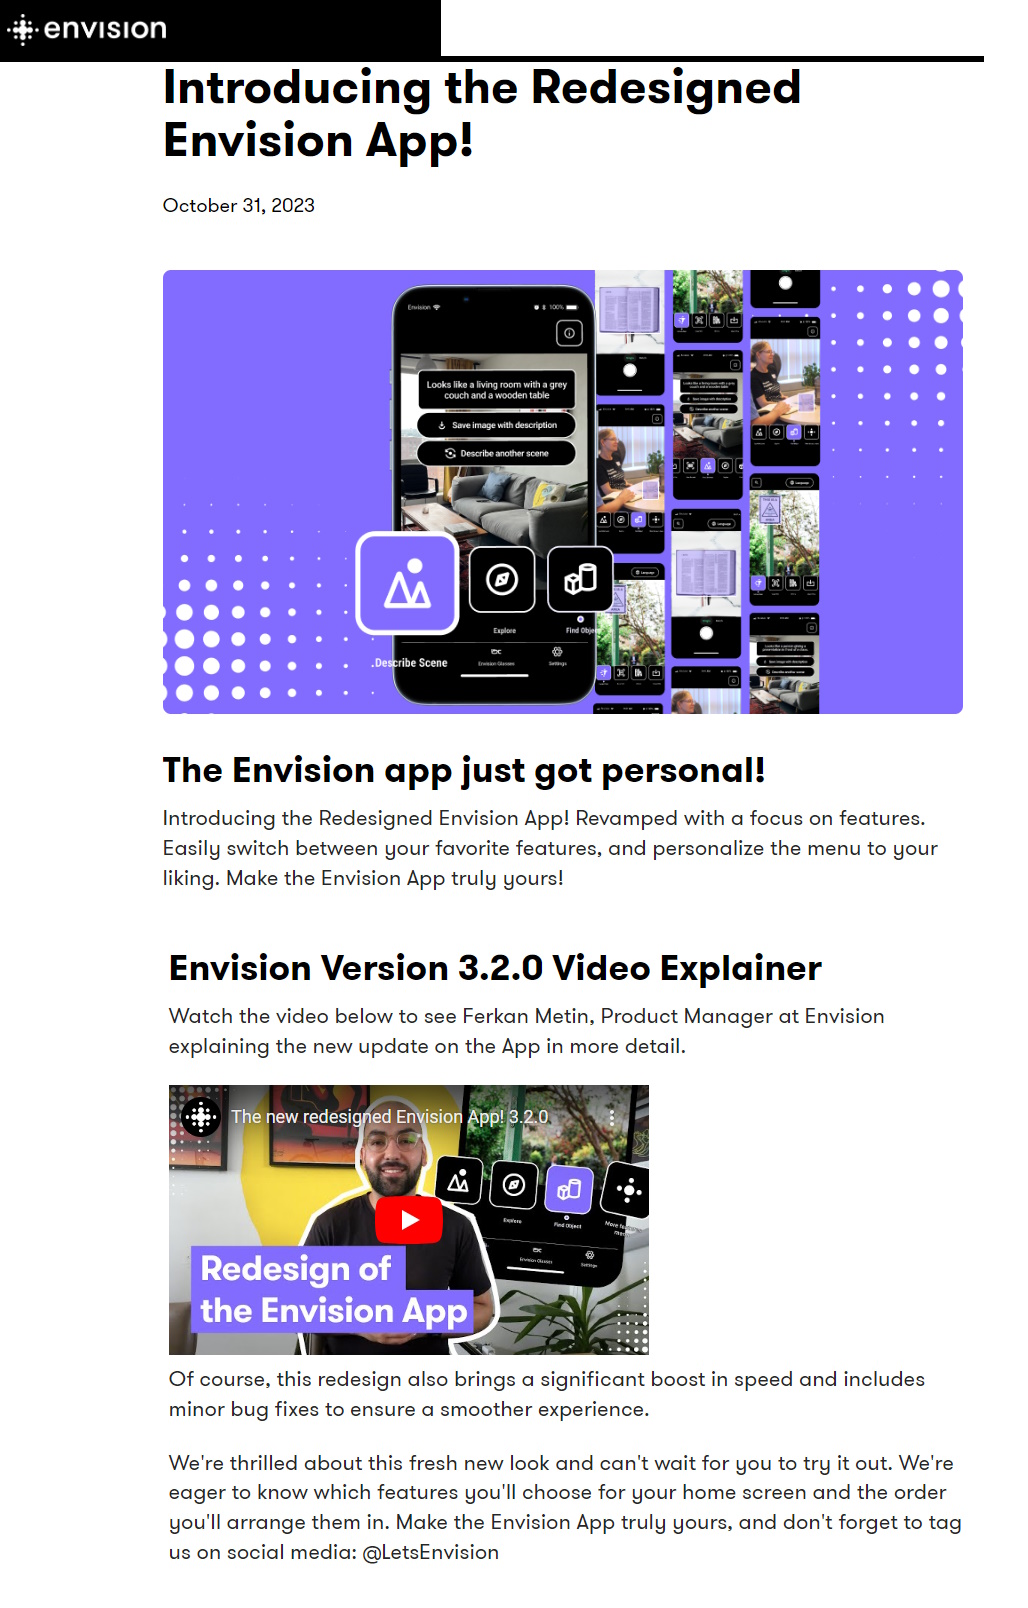 toegevoegd document 2 van Envision AI app  